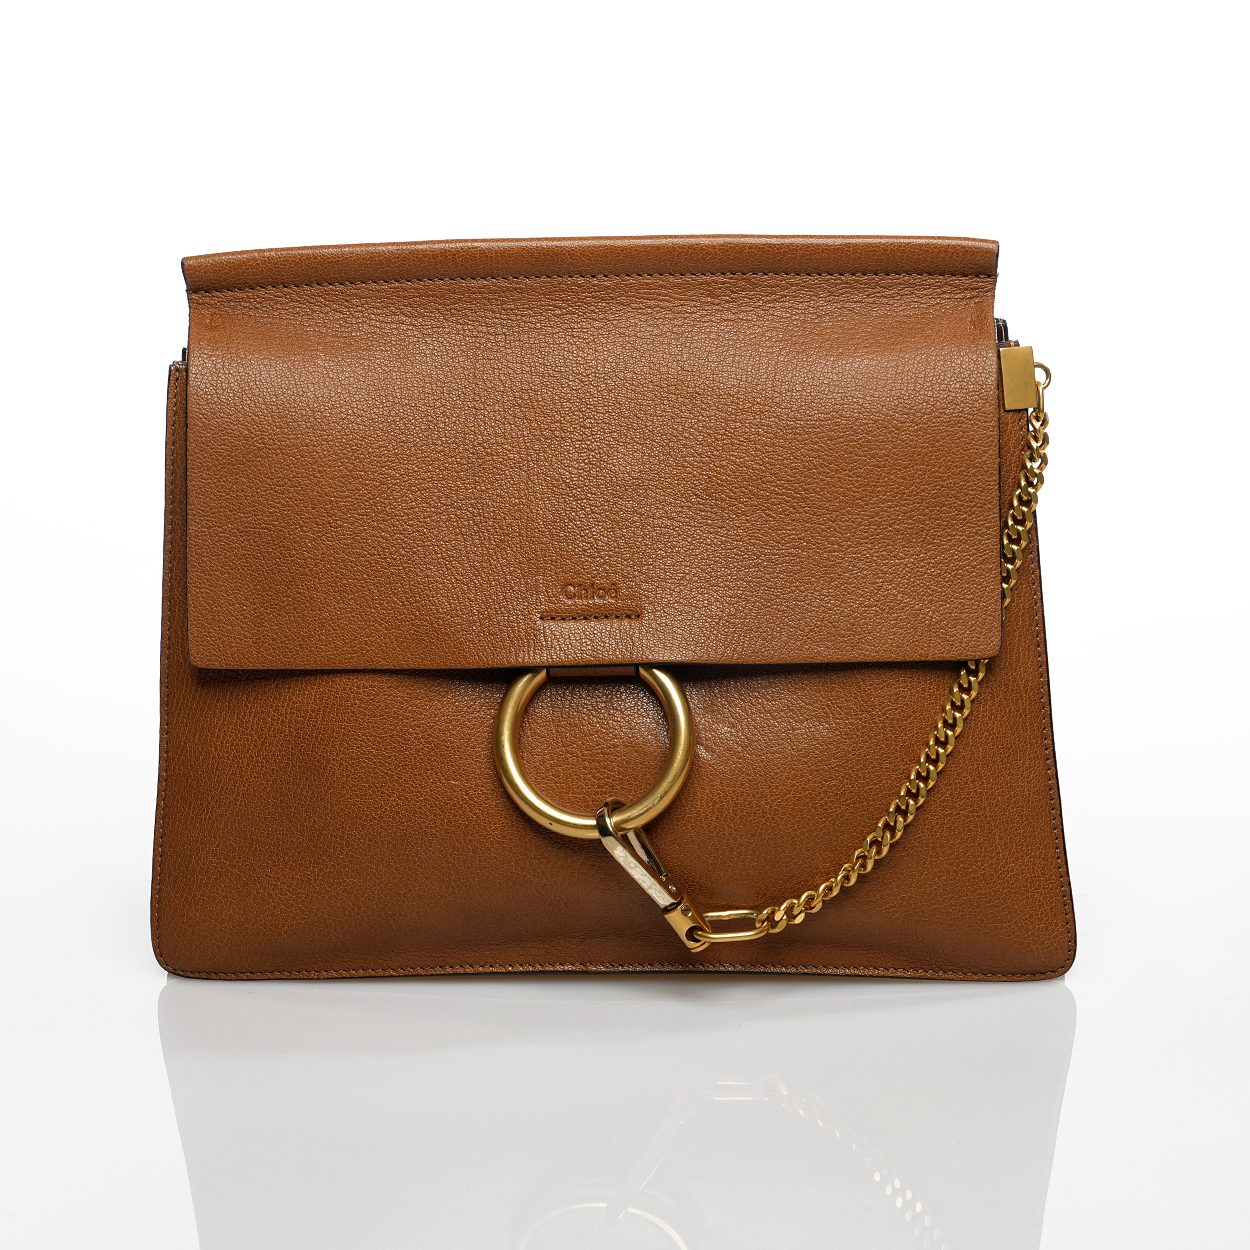 Chloe - Brown Leather Large Faye Clutch Bag